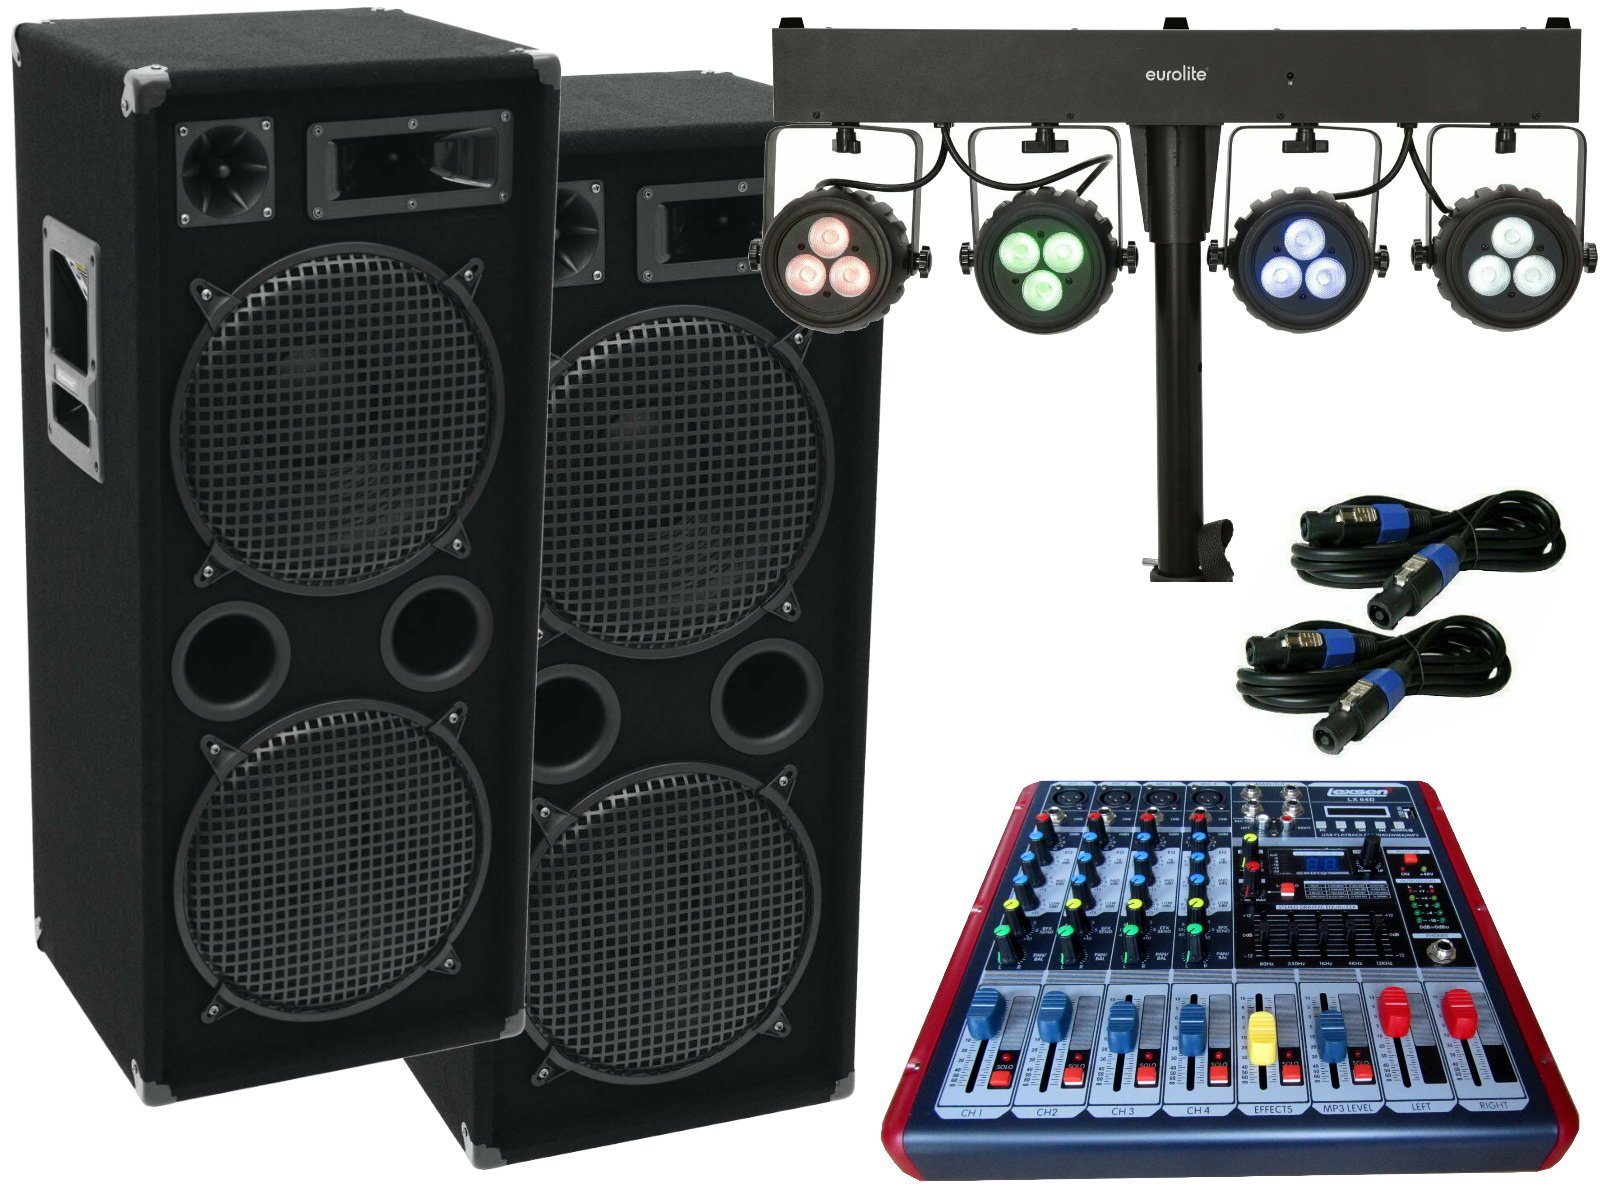 DSX DSX PA Set 2 Powermixer Anlage LED Licht DJ 3Wege USB Musikanlage Party-Lautsprecher